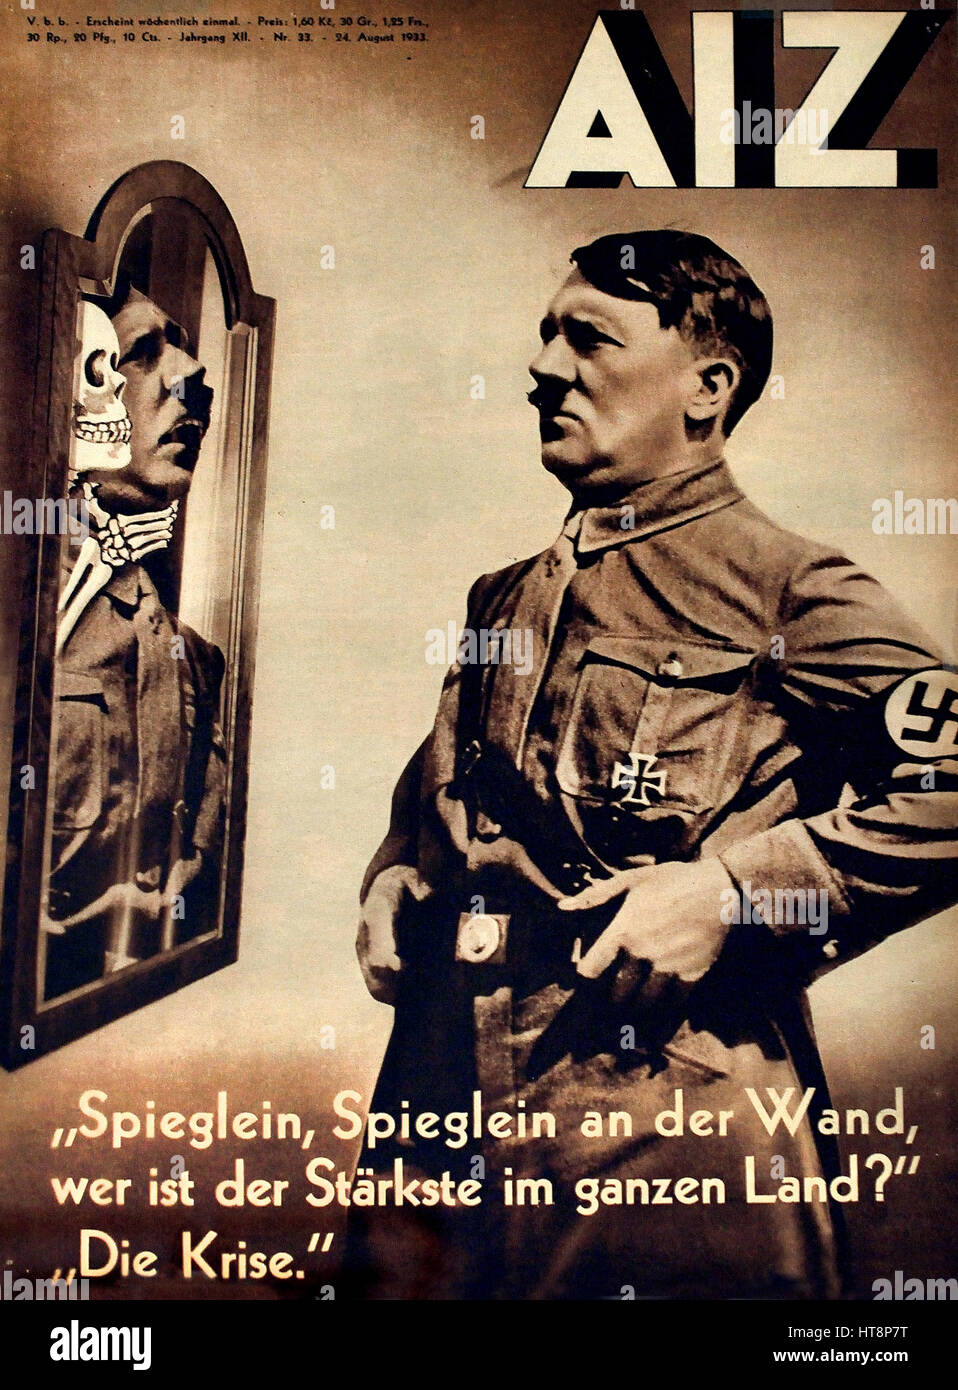 Adolf Hitler - La Germania Nazista A.I.Z. Berlin Seconda guerra mondiale Foto Stock